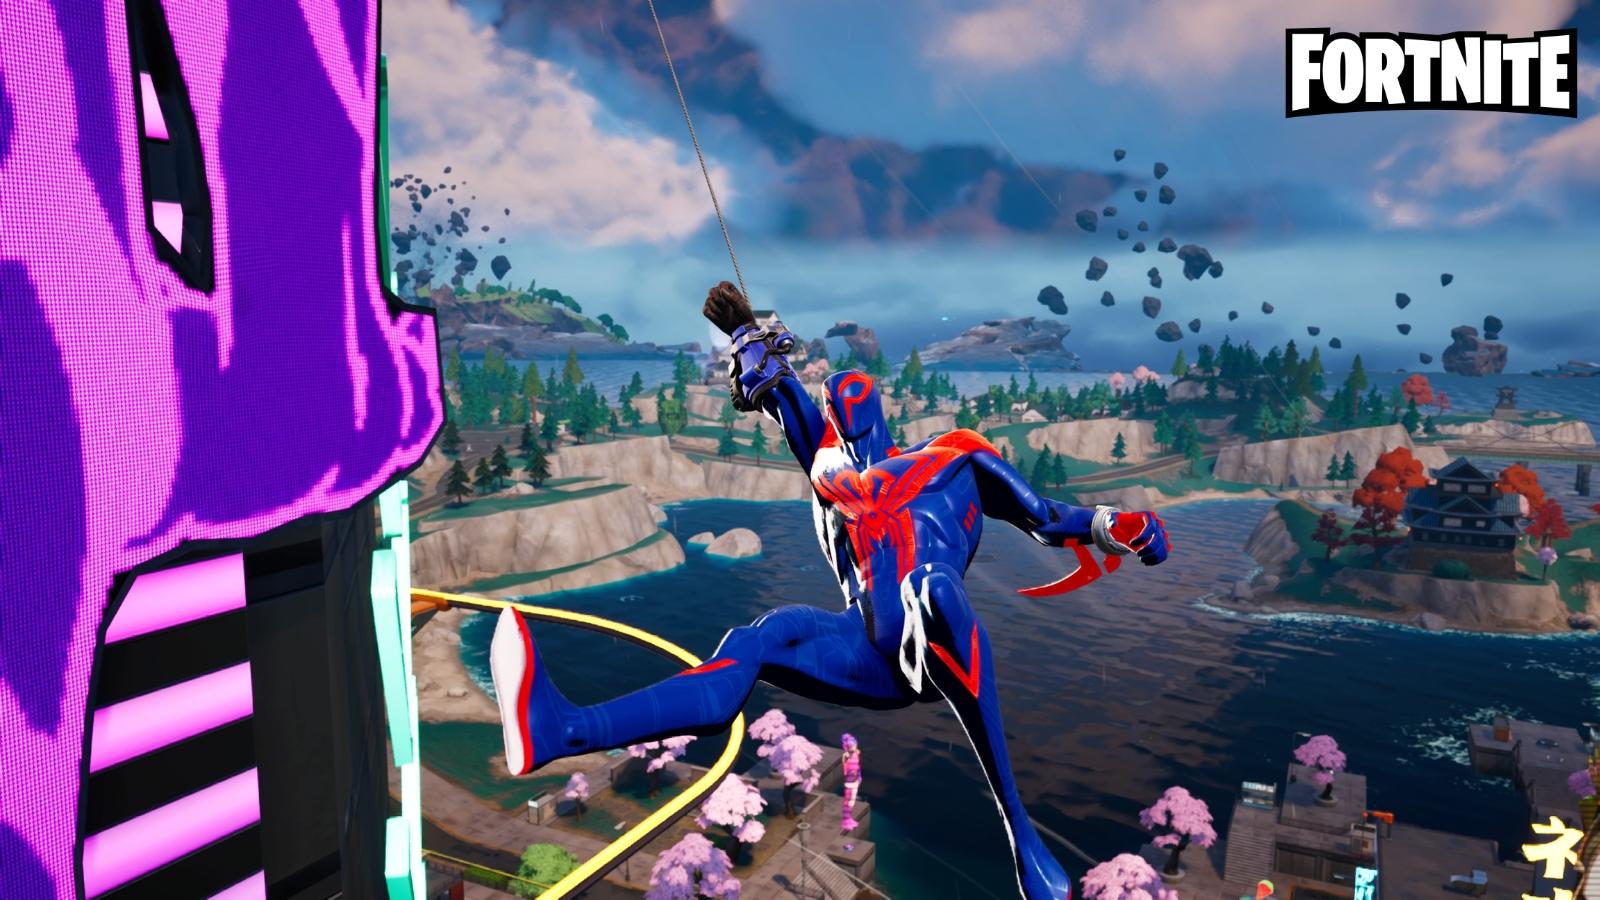 Spider-Man 2099 swinging in Fortnite's Mega City